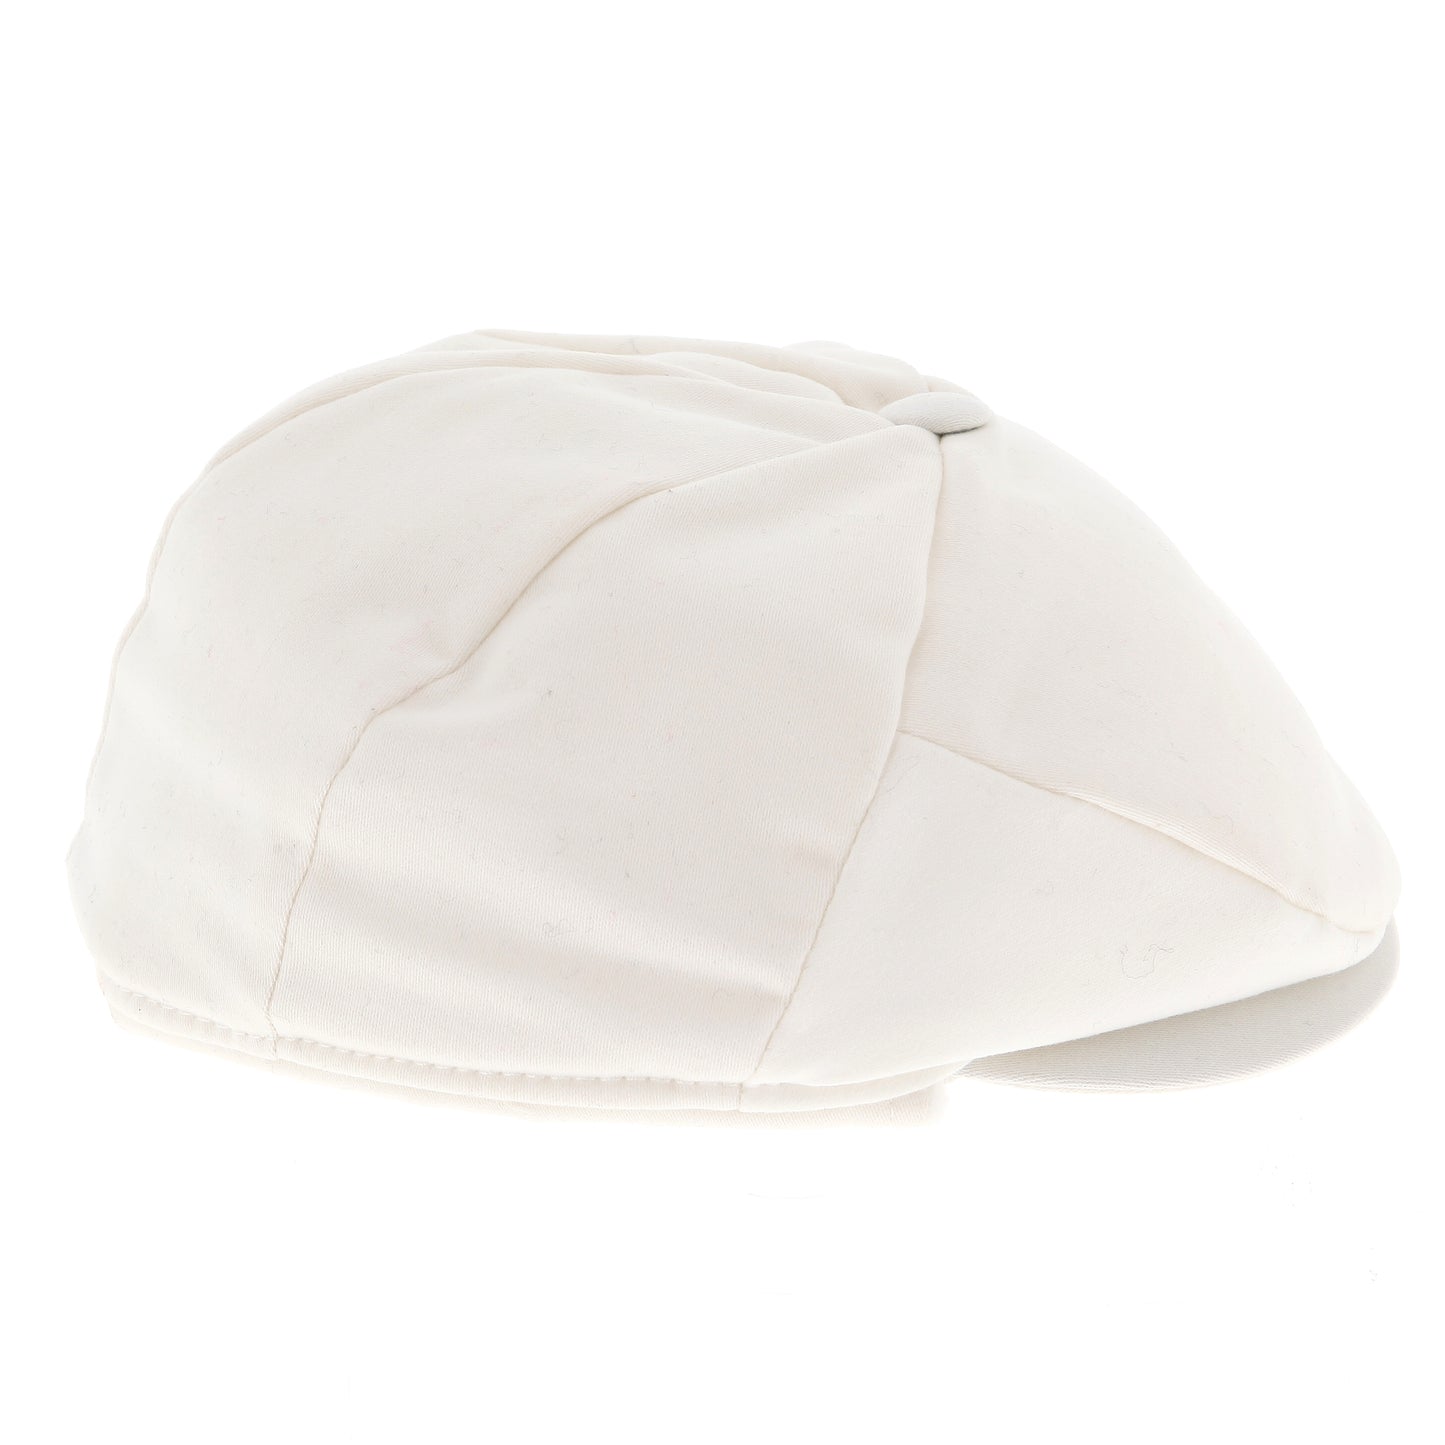 COLORICHIARI Cream velvet cap with earflaps